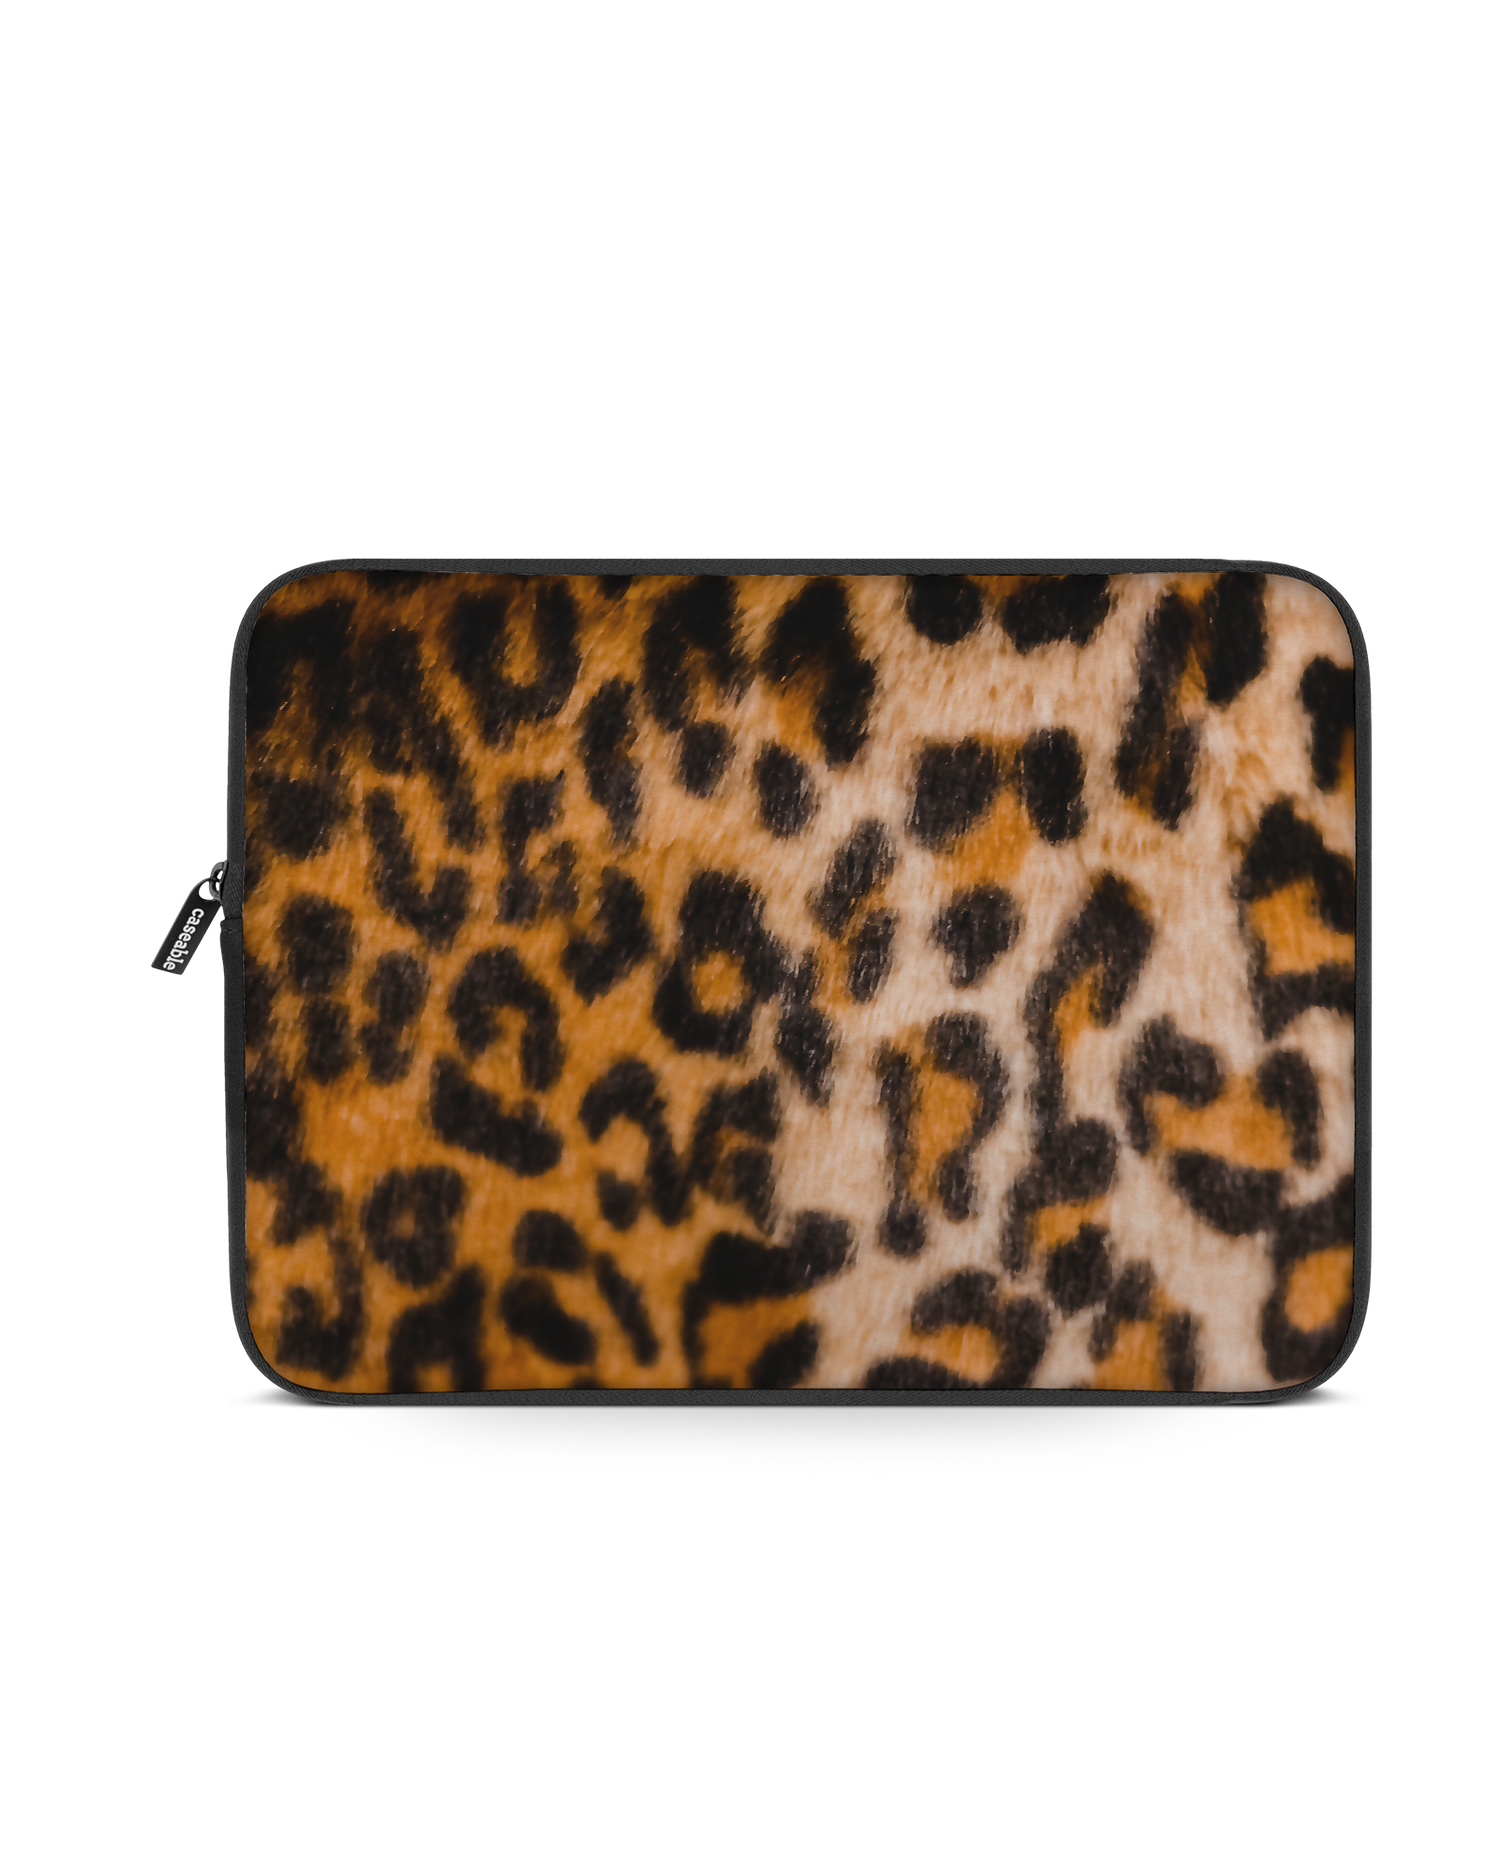 Leopard Pattern Laptop Case 13 inch: Front View